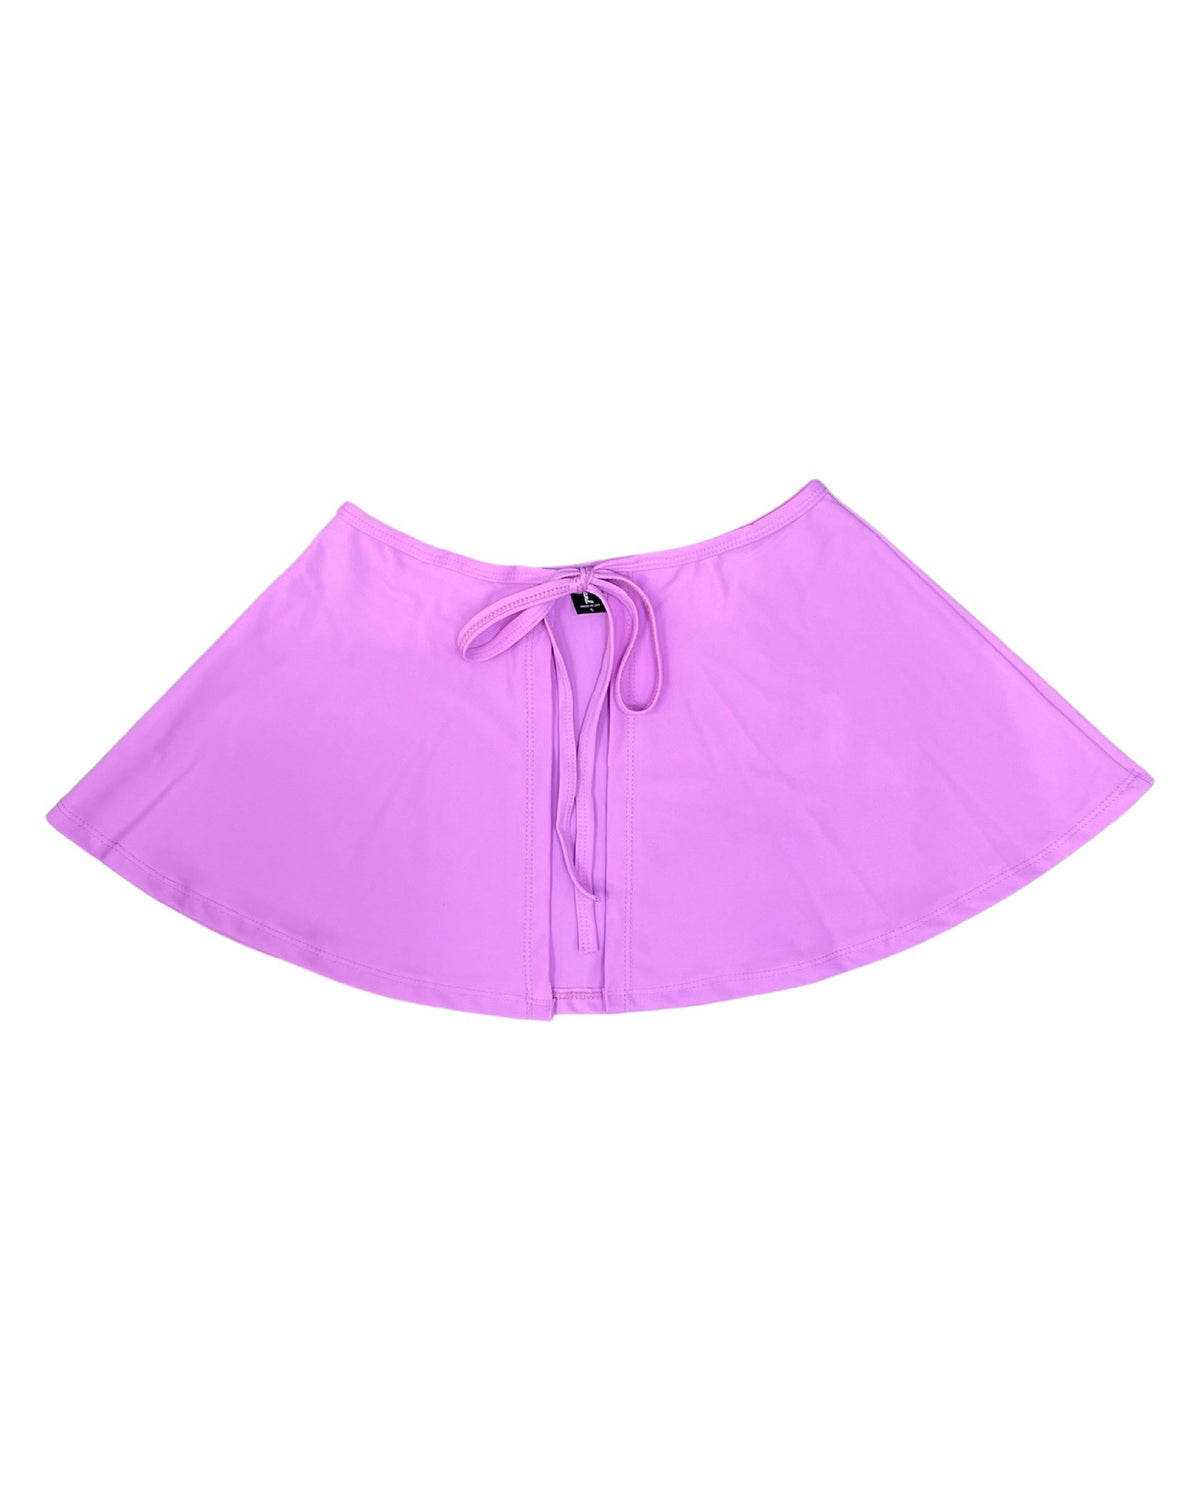 Spandex Skirt